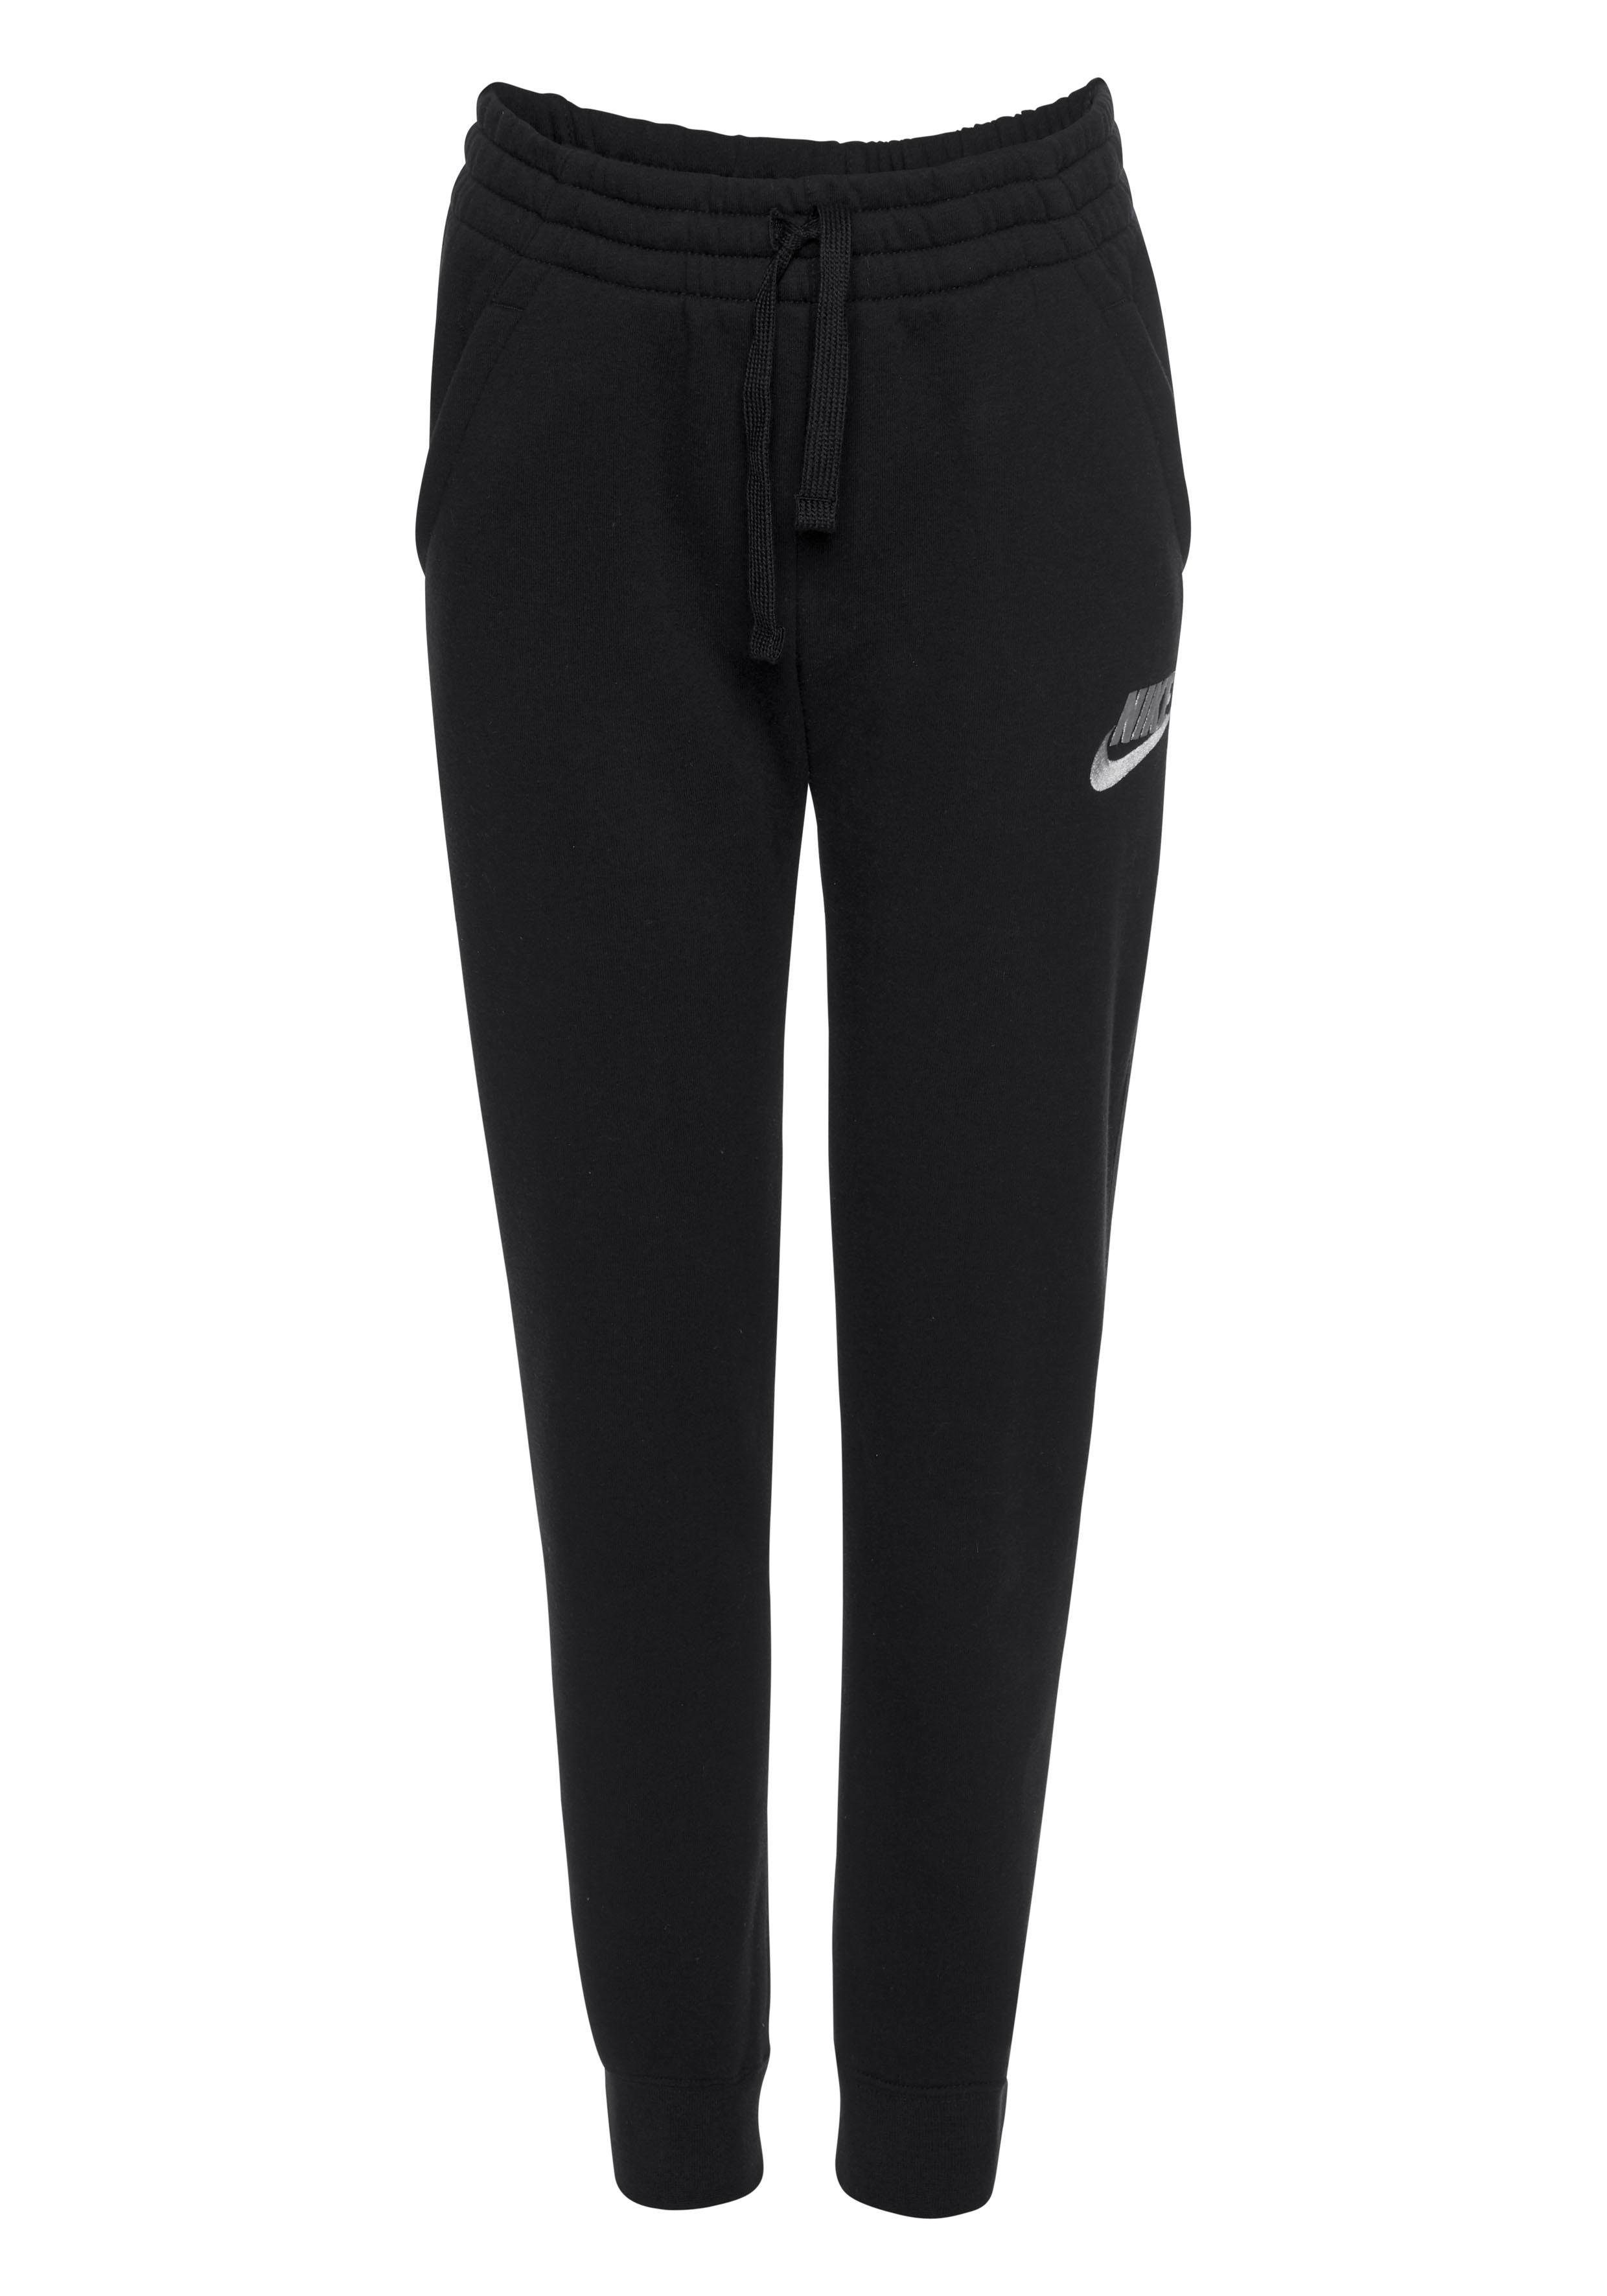 PANT schwarz FLEECE B Sportswear CLUB NSW Nike Jogginghose JOGGER